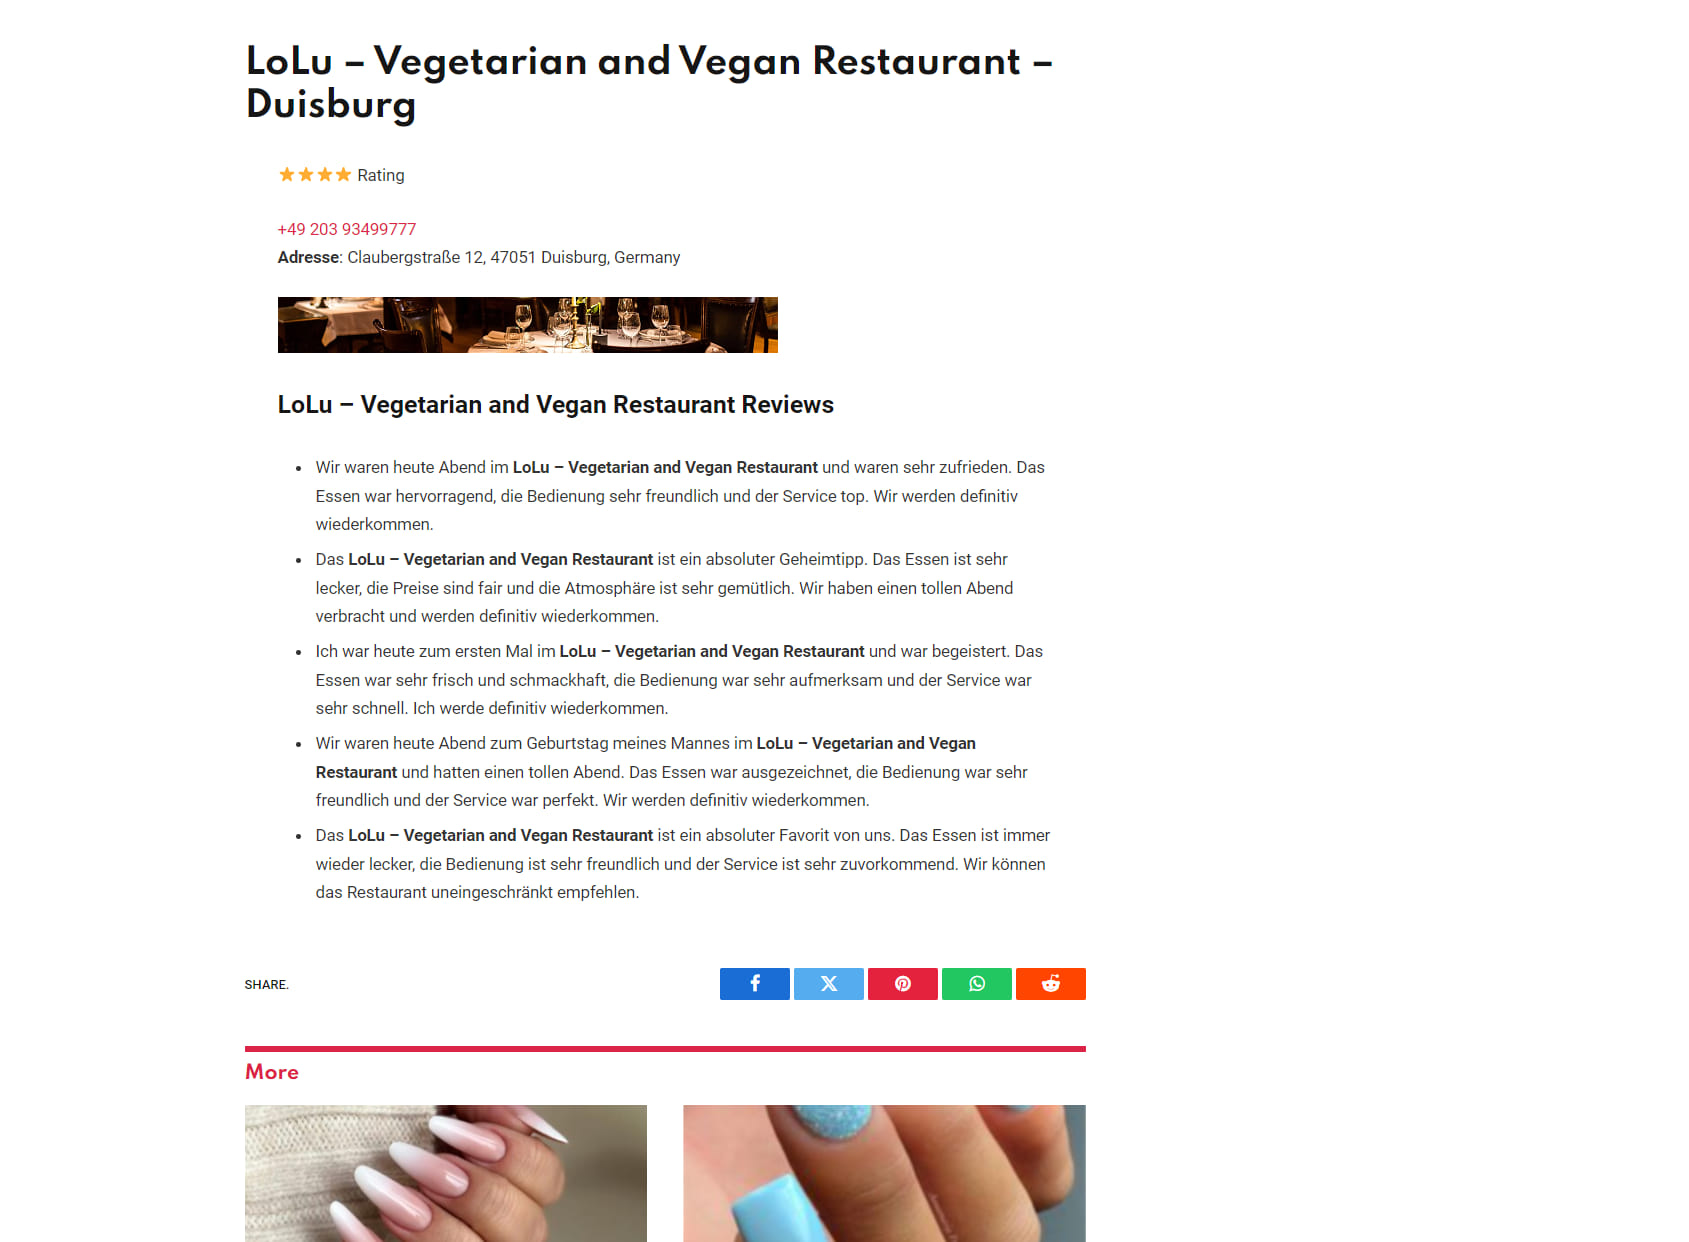 LoLu - Vegetarian and Vegan Restaurant - Duisburg